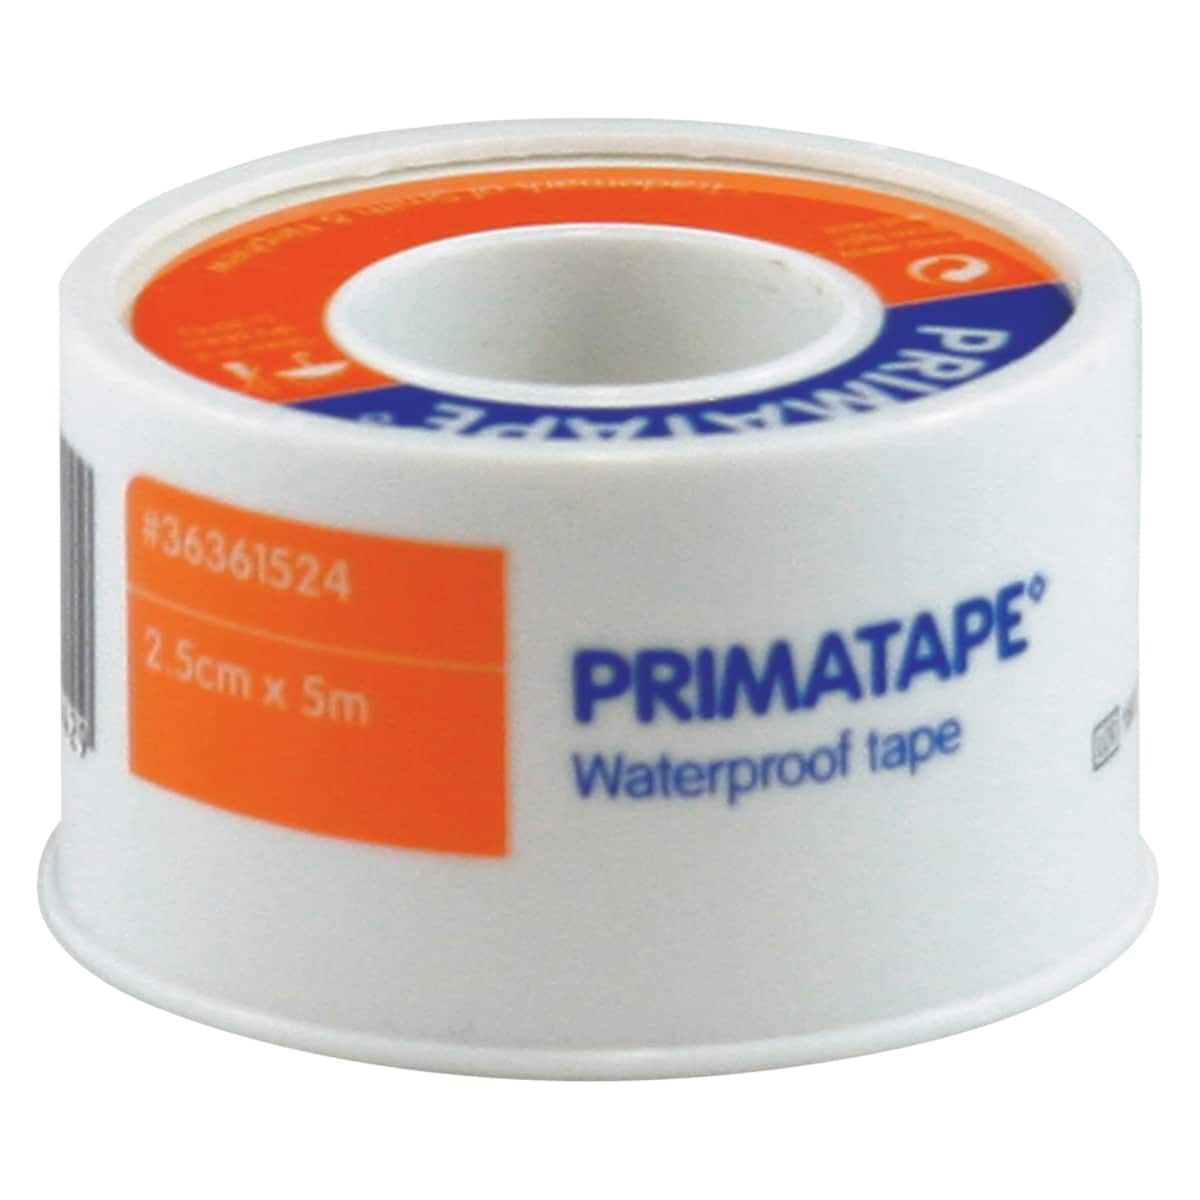 Primatape Waterproof Tape 2.5cm x 5m by Smith & Nephew